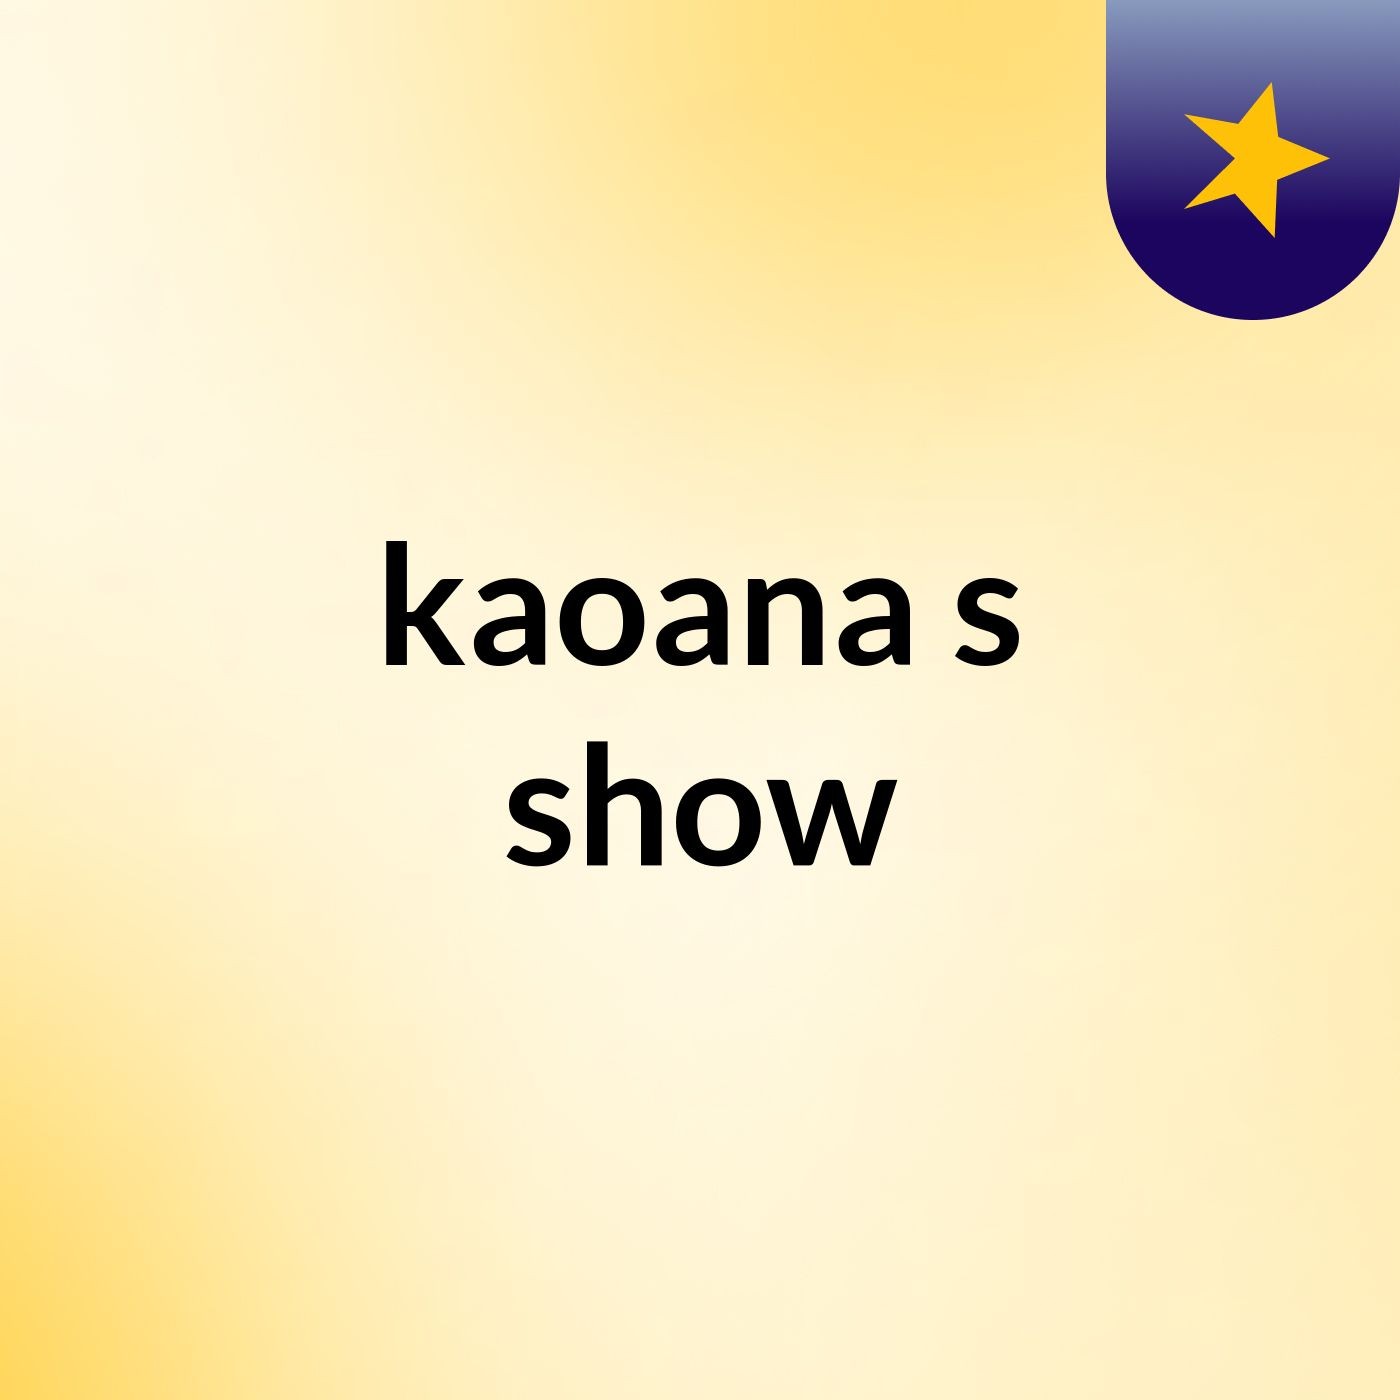 kaoana's show